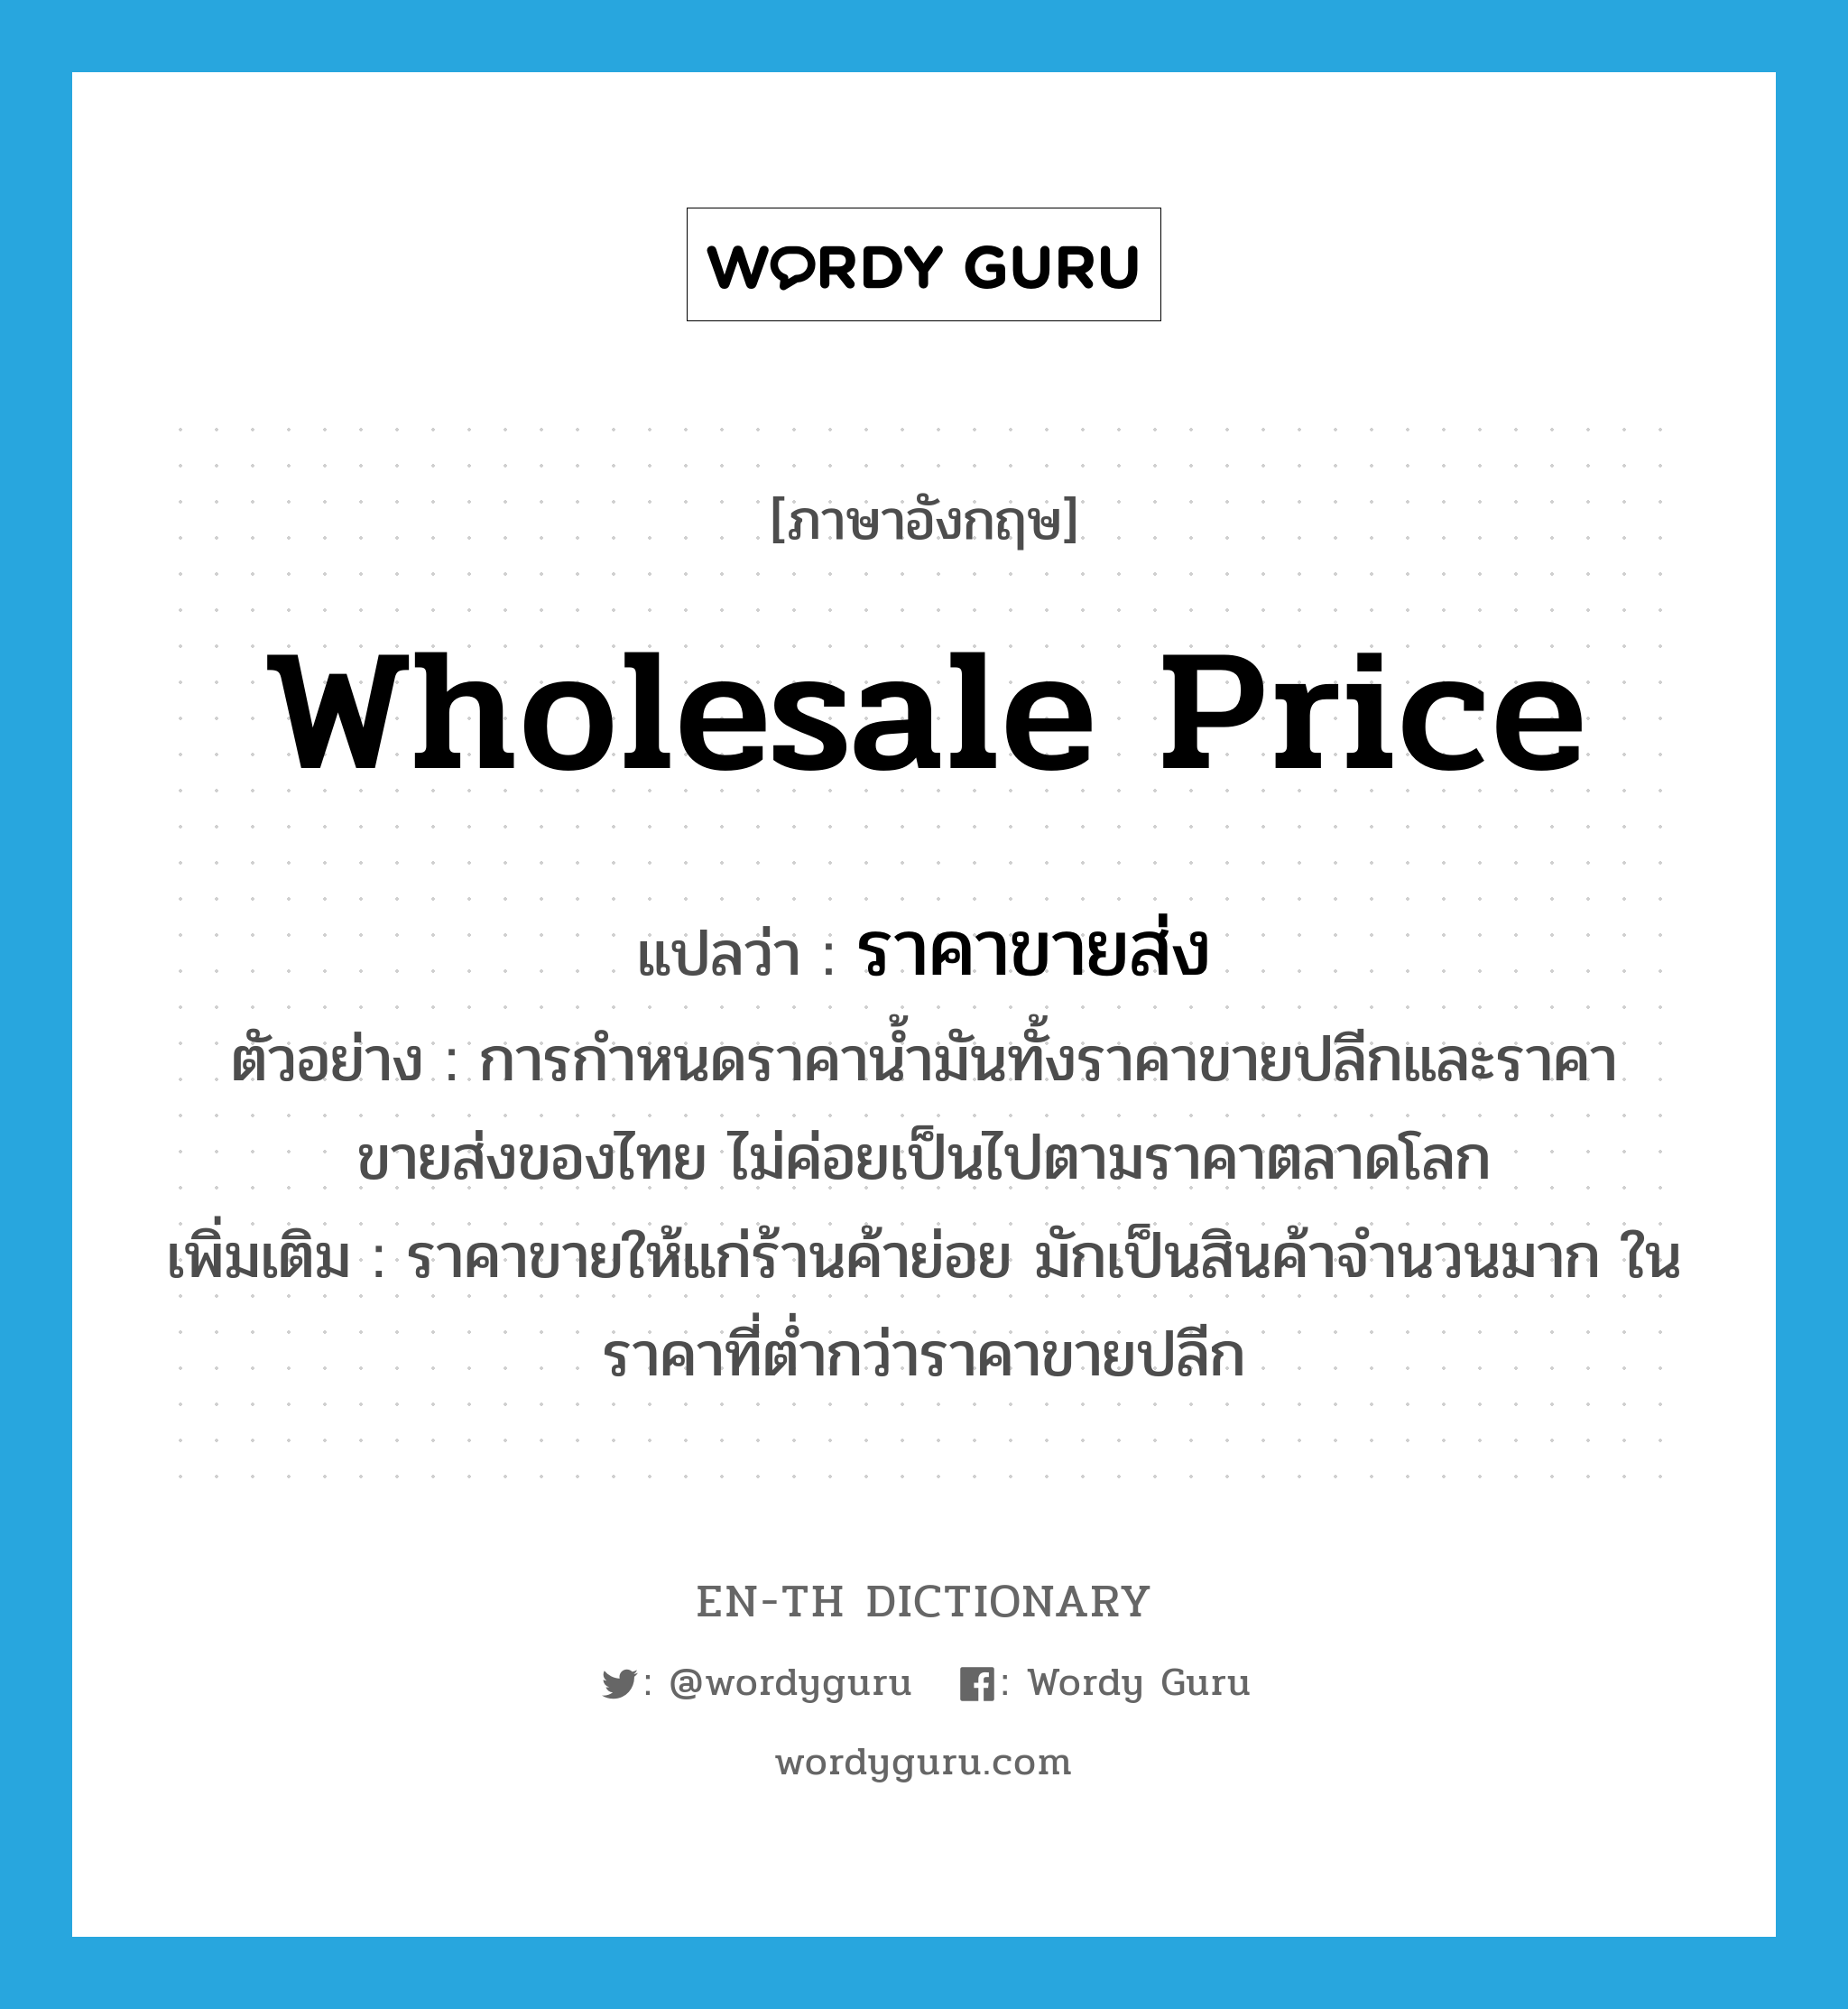 wholesale price แปลว่า?, คำศัพท์ภาษาอังกฤษ wholesale price แปลว่า ราคาขายส่ง ประเภท N ตัวอย่าง การกำหนดราคาน้ำมันทั้งราคาขายปลีกและราคาขายส่งของไทย ไม่ค่อยเป็นไปตามราคาตลาดโลก เพิ่มเติม ราคาขายให้แก่ร้านค้าย่อย มักเป็นสินค้าจำนวนมาก ในราคาที่ต่ำกว่าราคาขายปลีก หมวด N